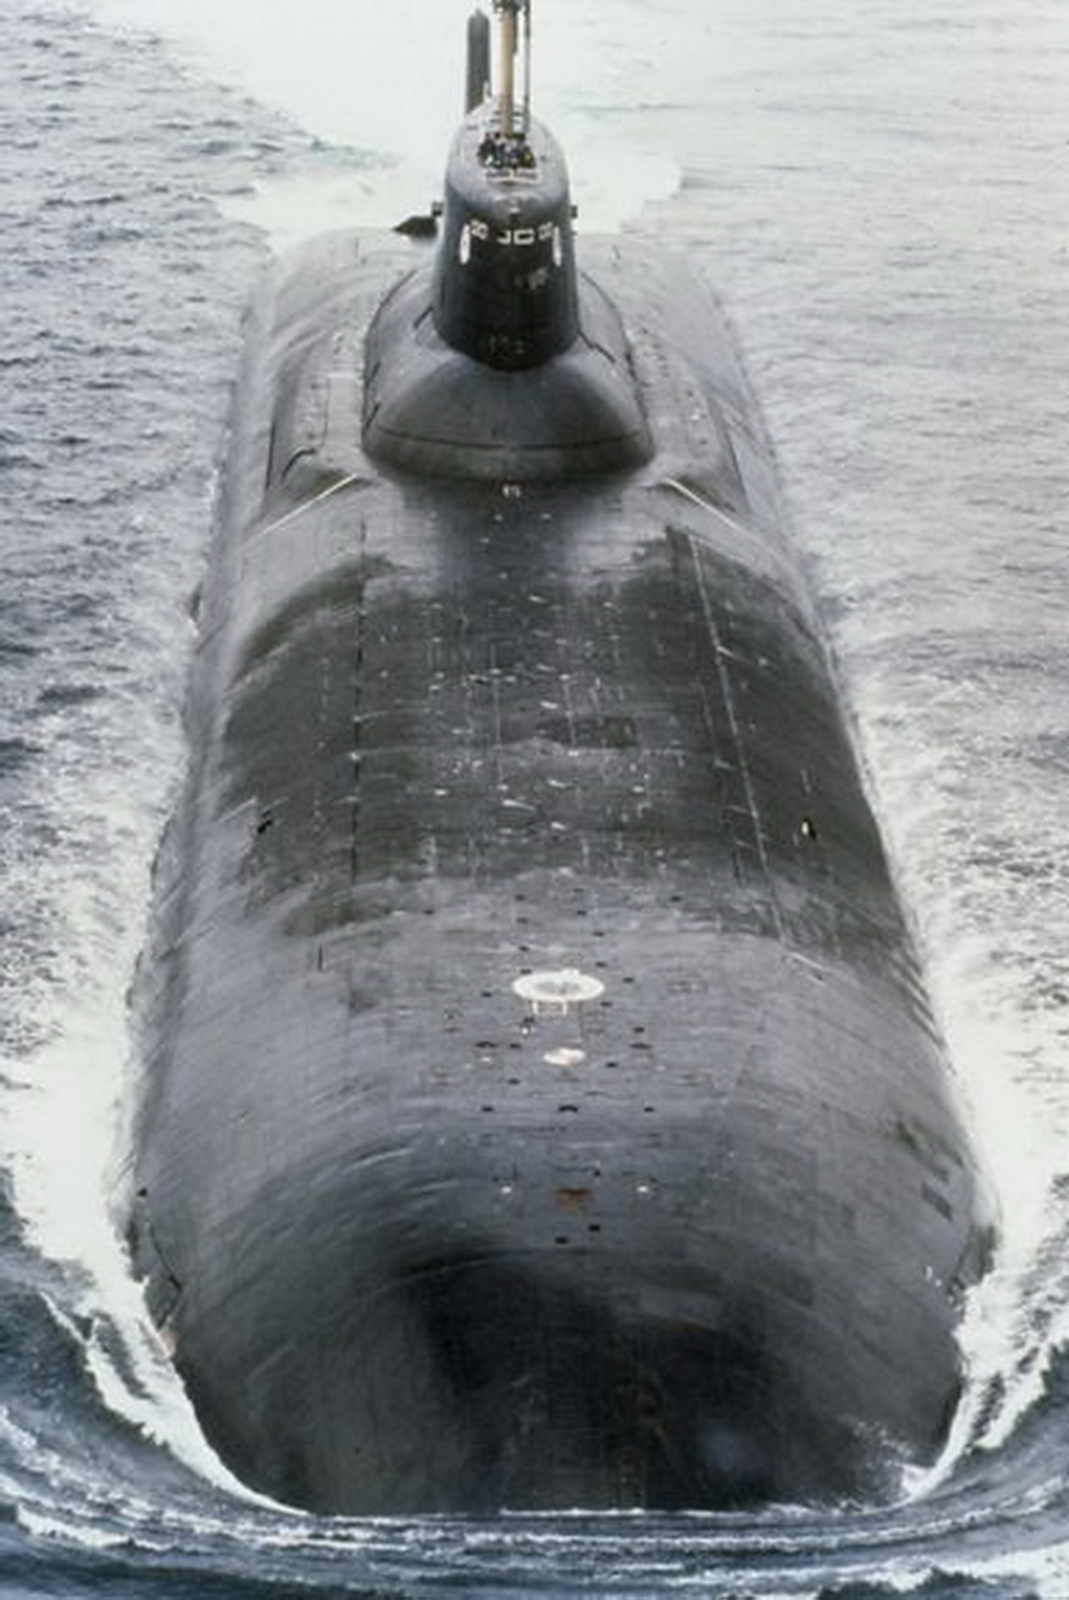 Класса тайфун. Подводная лодка 941 акула. Атомная подводная лодка проекта 941 акула. Подводная лодка акула Тайфун. Лодка 941 проекта акула.